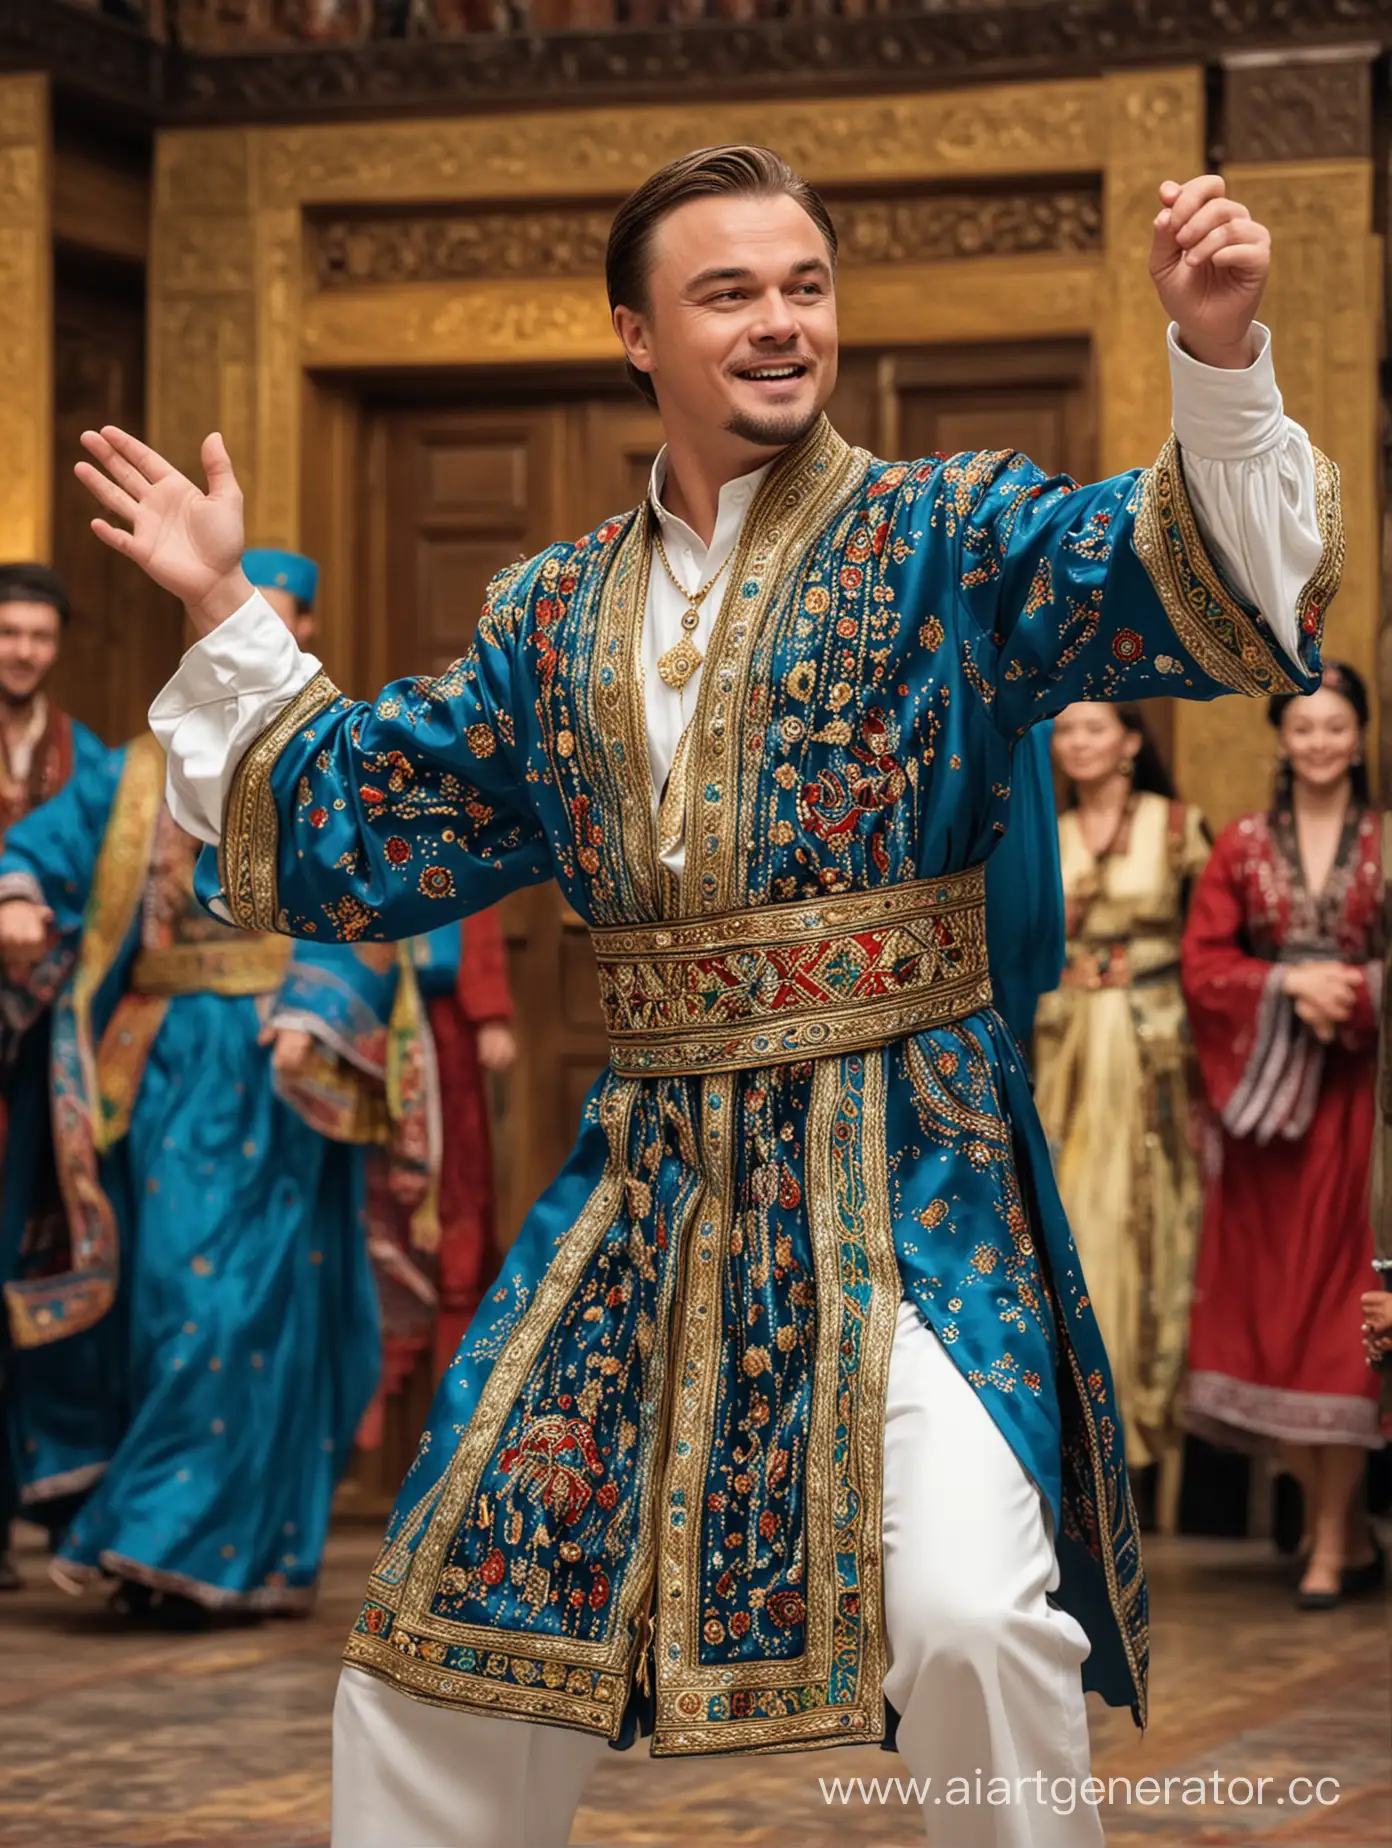 Leonardo-DiCaprio-in-Traditional-Kazakh-Dance-Outfit